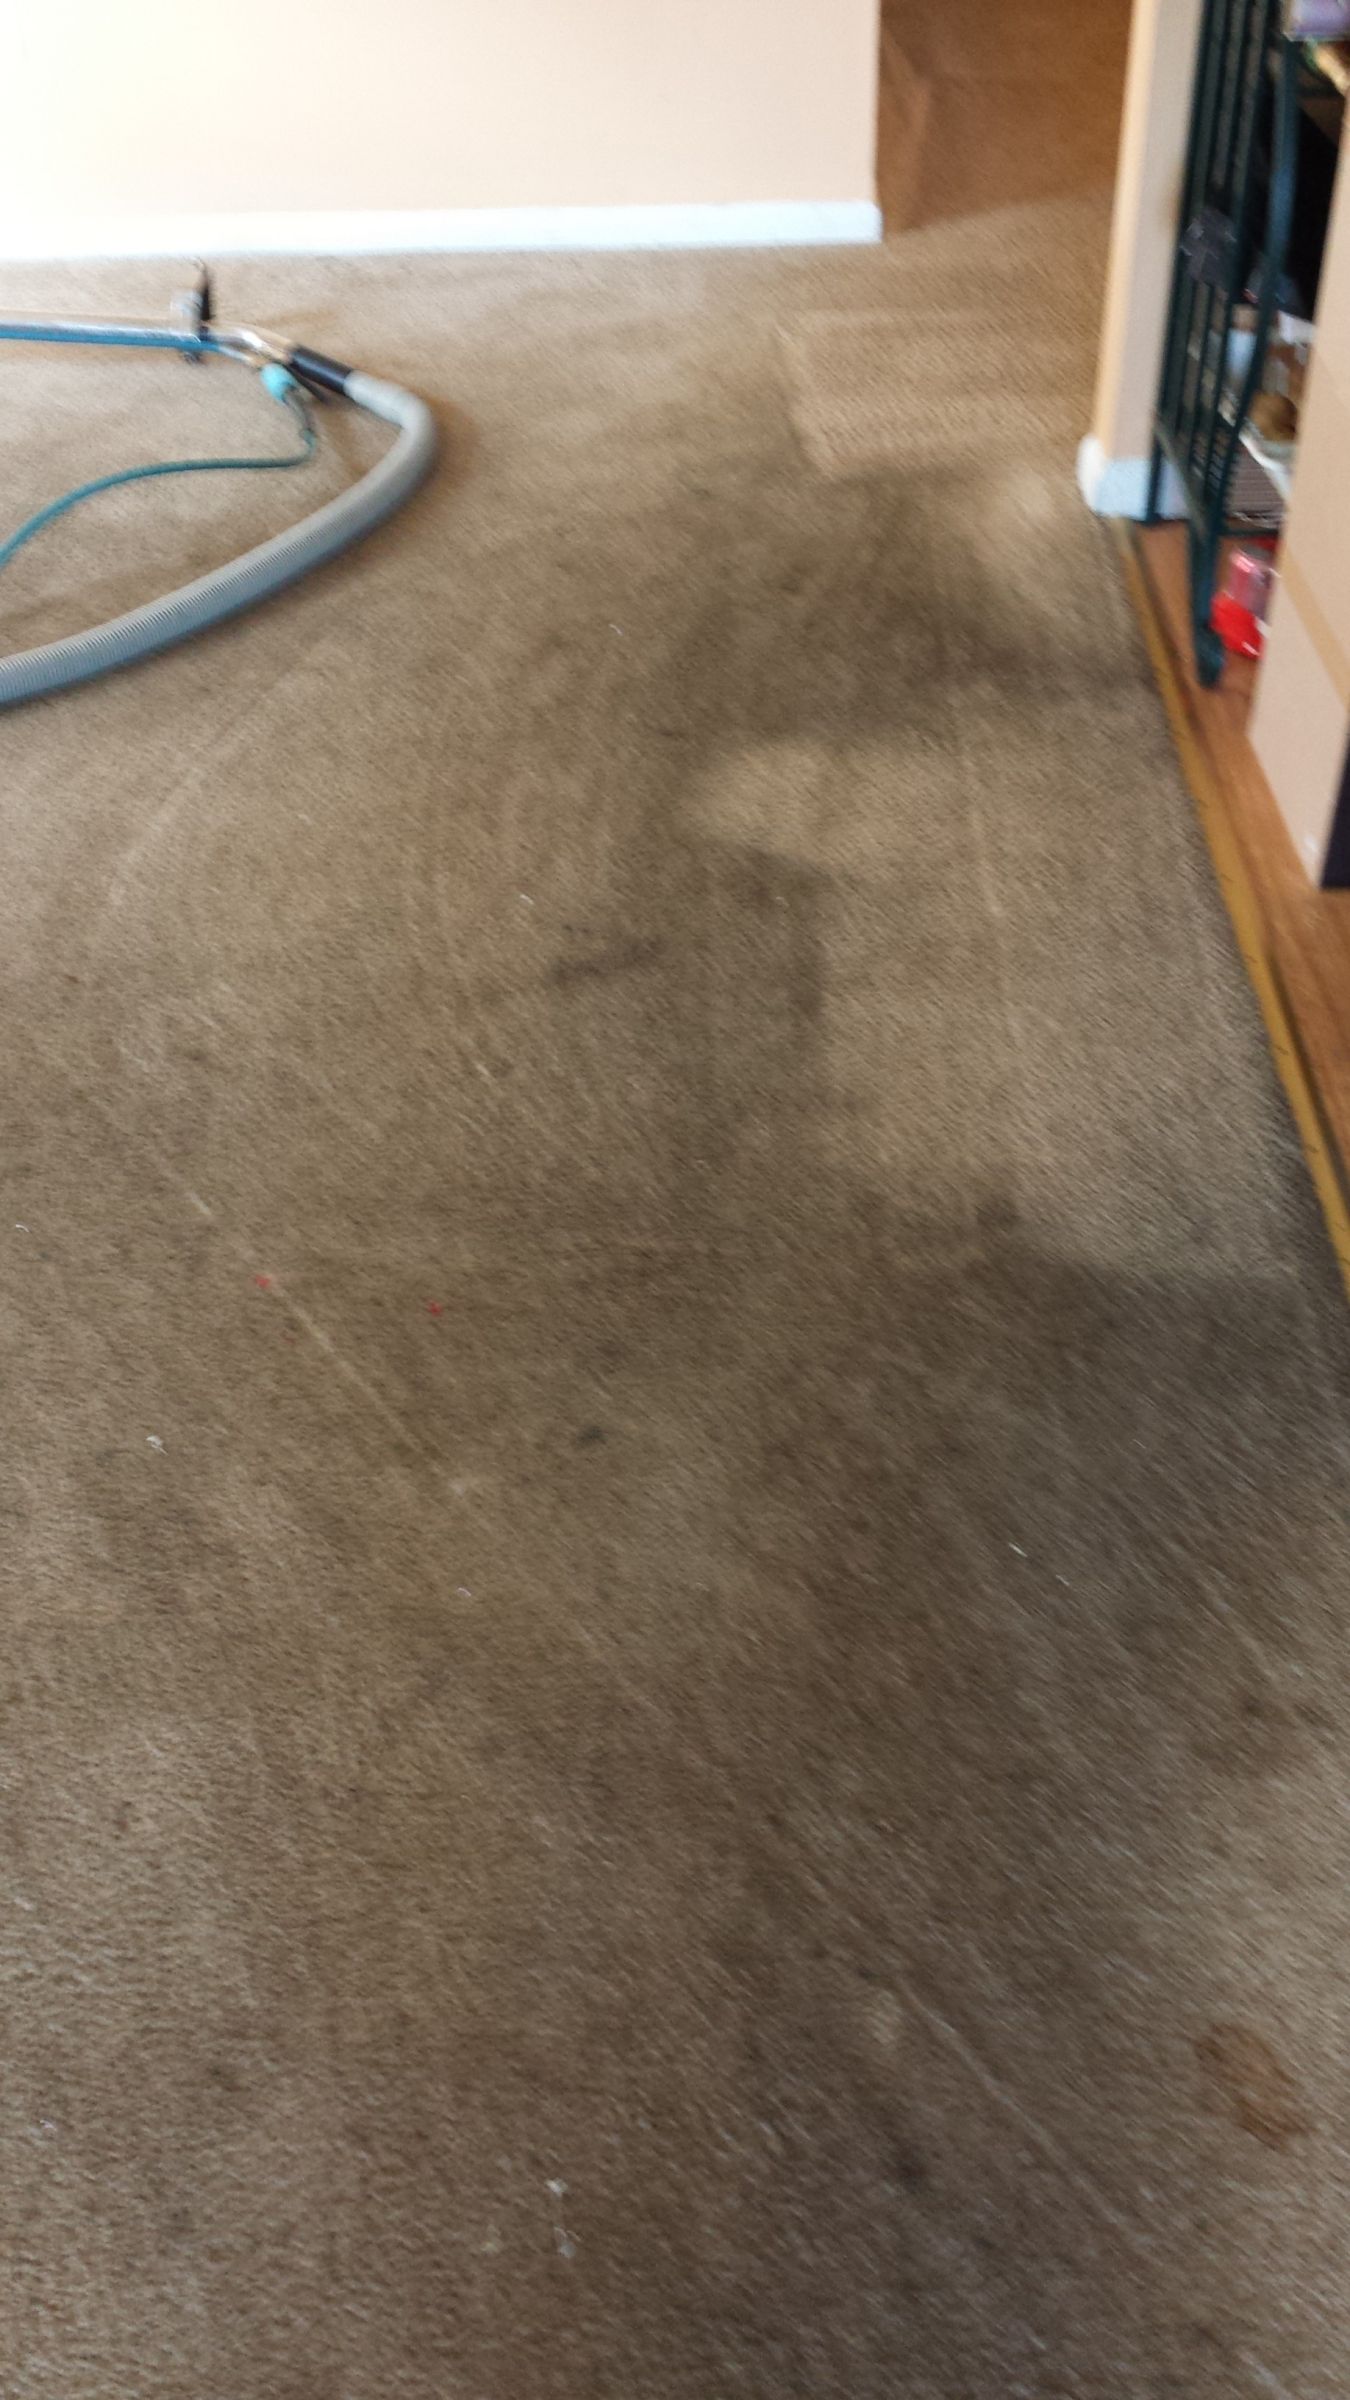 Carpet Cleaning Blackwood. Experts Don’t Leave Wet Carpets